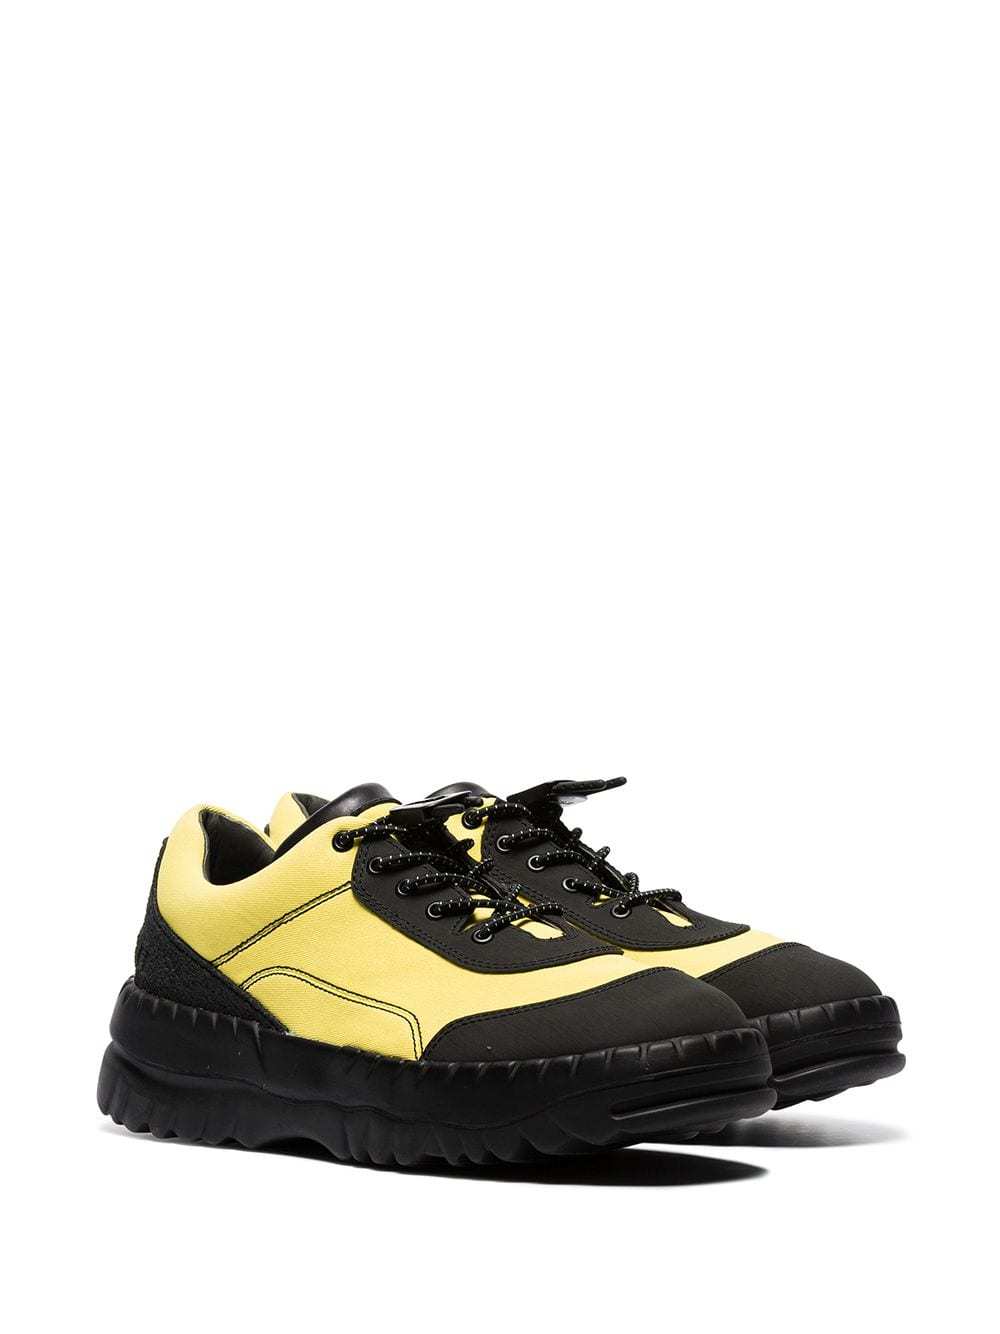 Camper Lab X Kiko Kostadinov Yellow Lace Up Derby Shoes, $295 ...